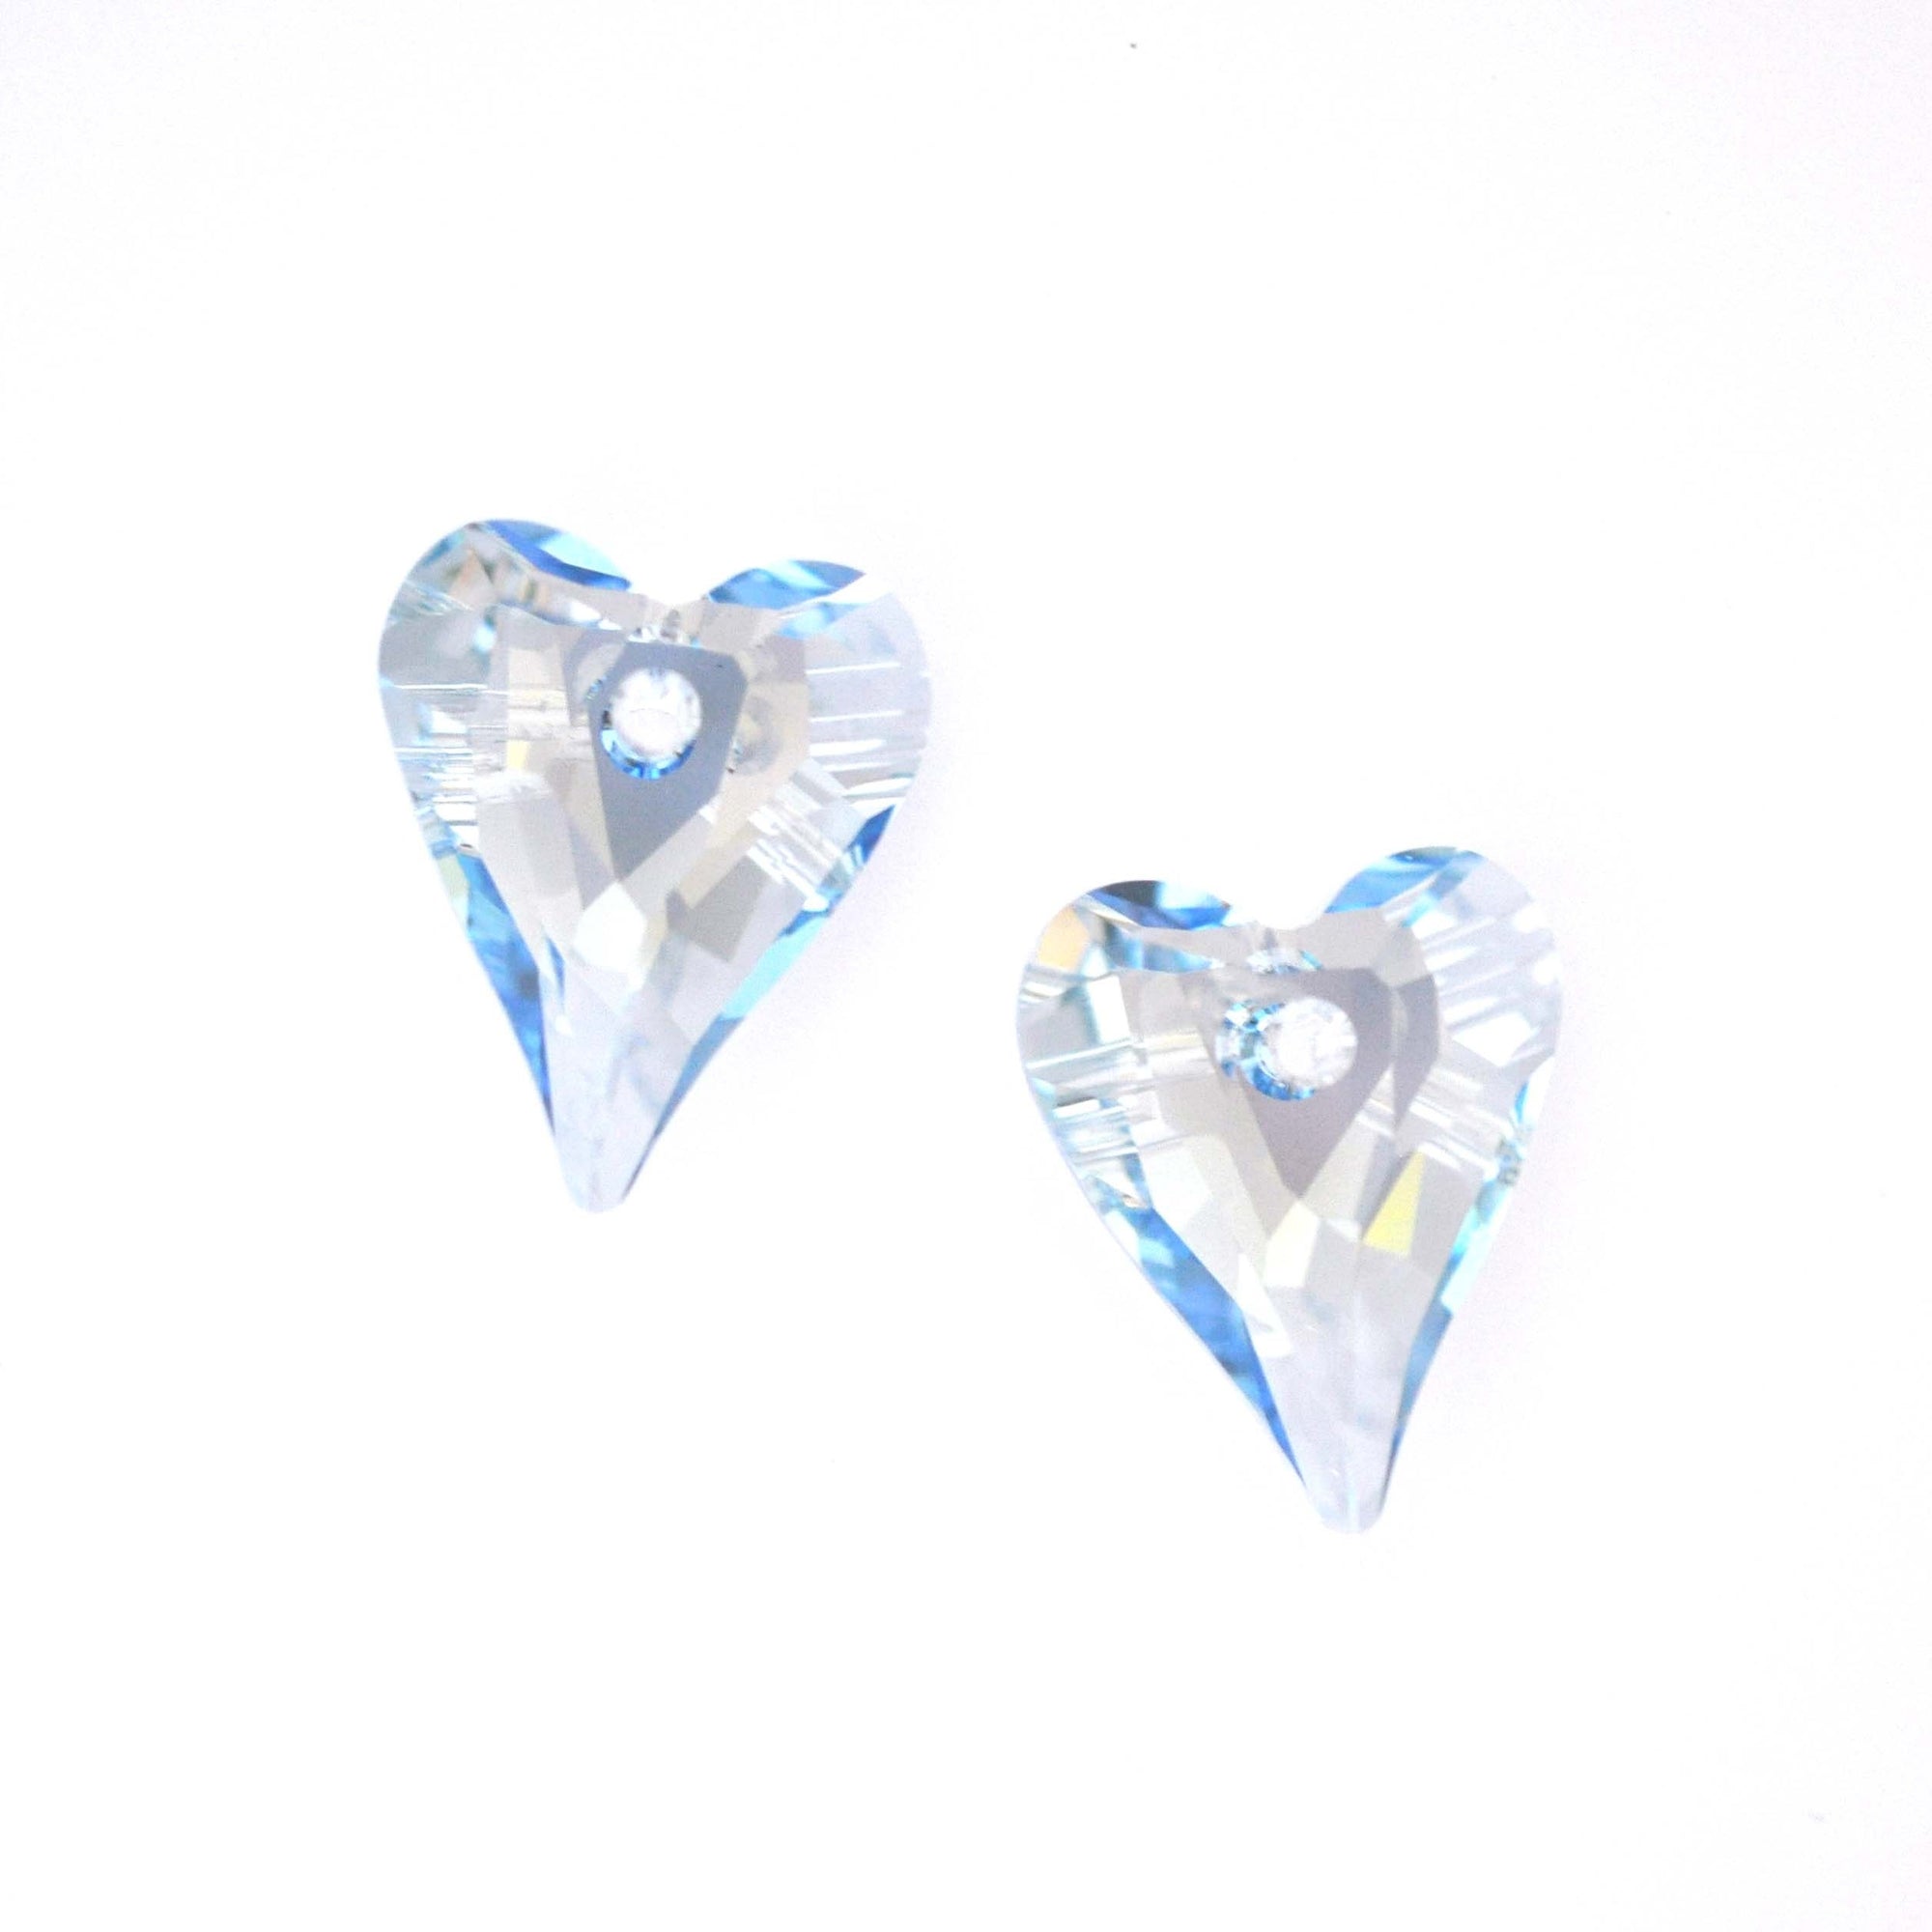 Blue Shade Embrace Heart Pendant 27mm 6240 Barton Crystal - 1 Heart